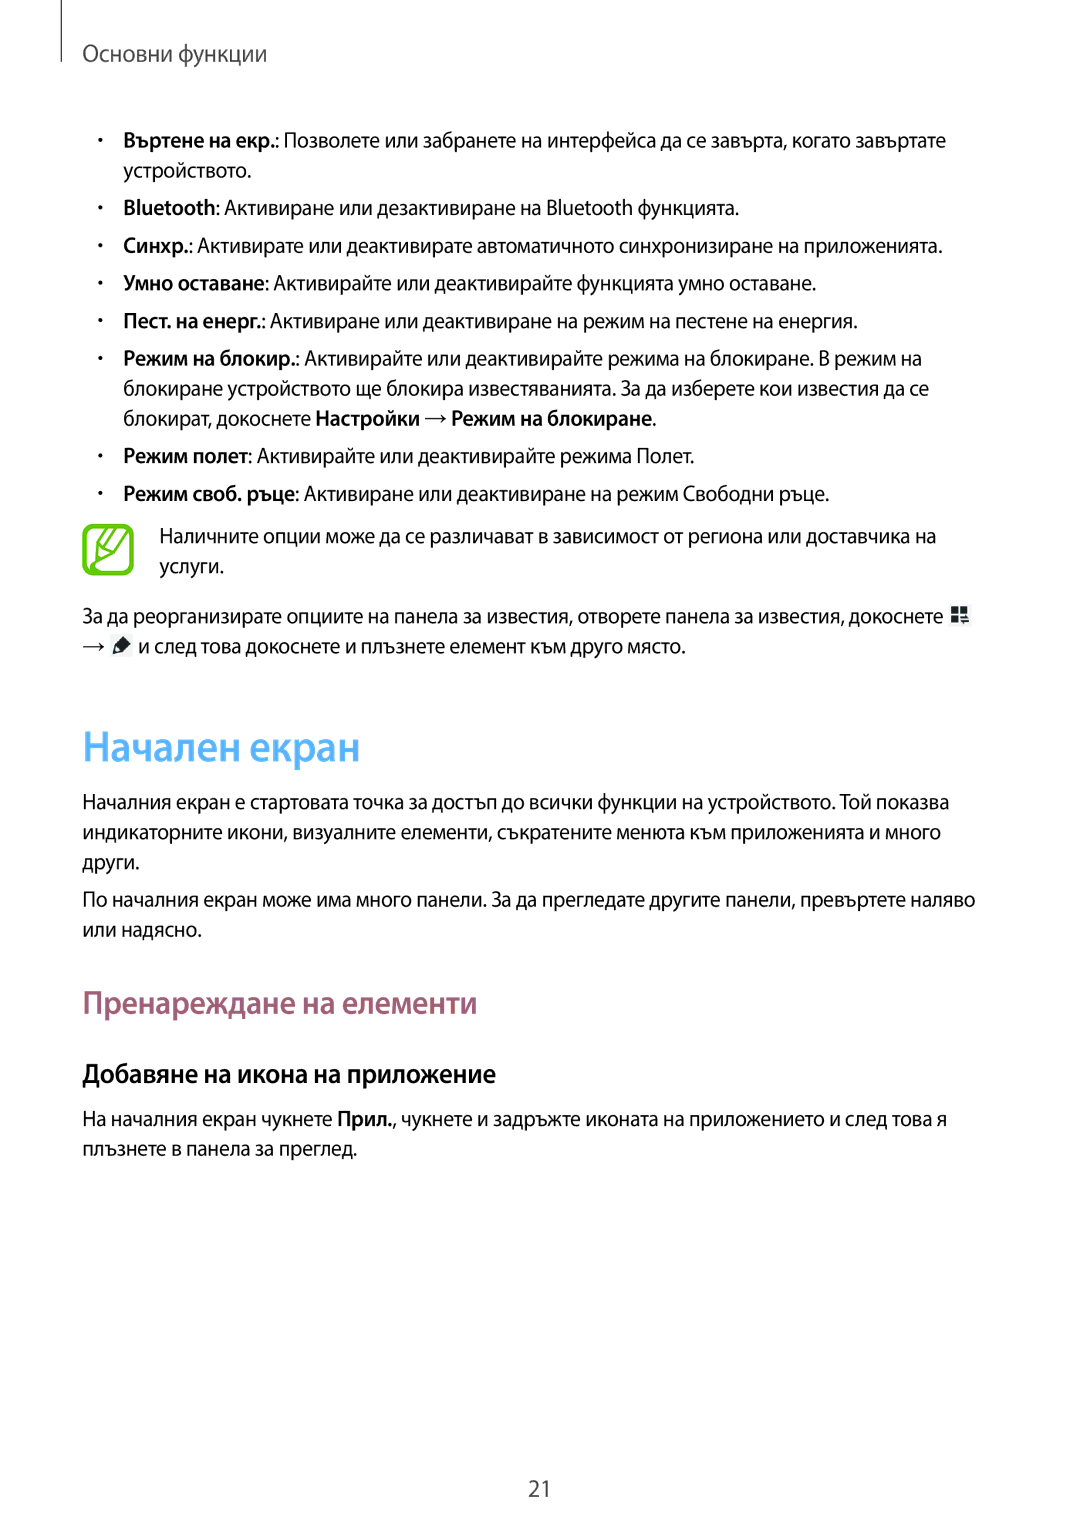 Samsung GT-P5210ZWABGL, GT-P5210MKABGL manual Начален екран, Пренареждане на елементи, Добавяне на икона на приложение 